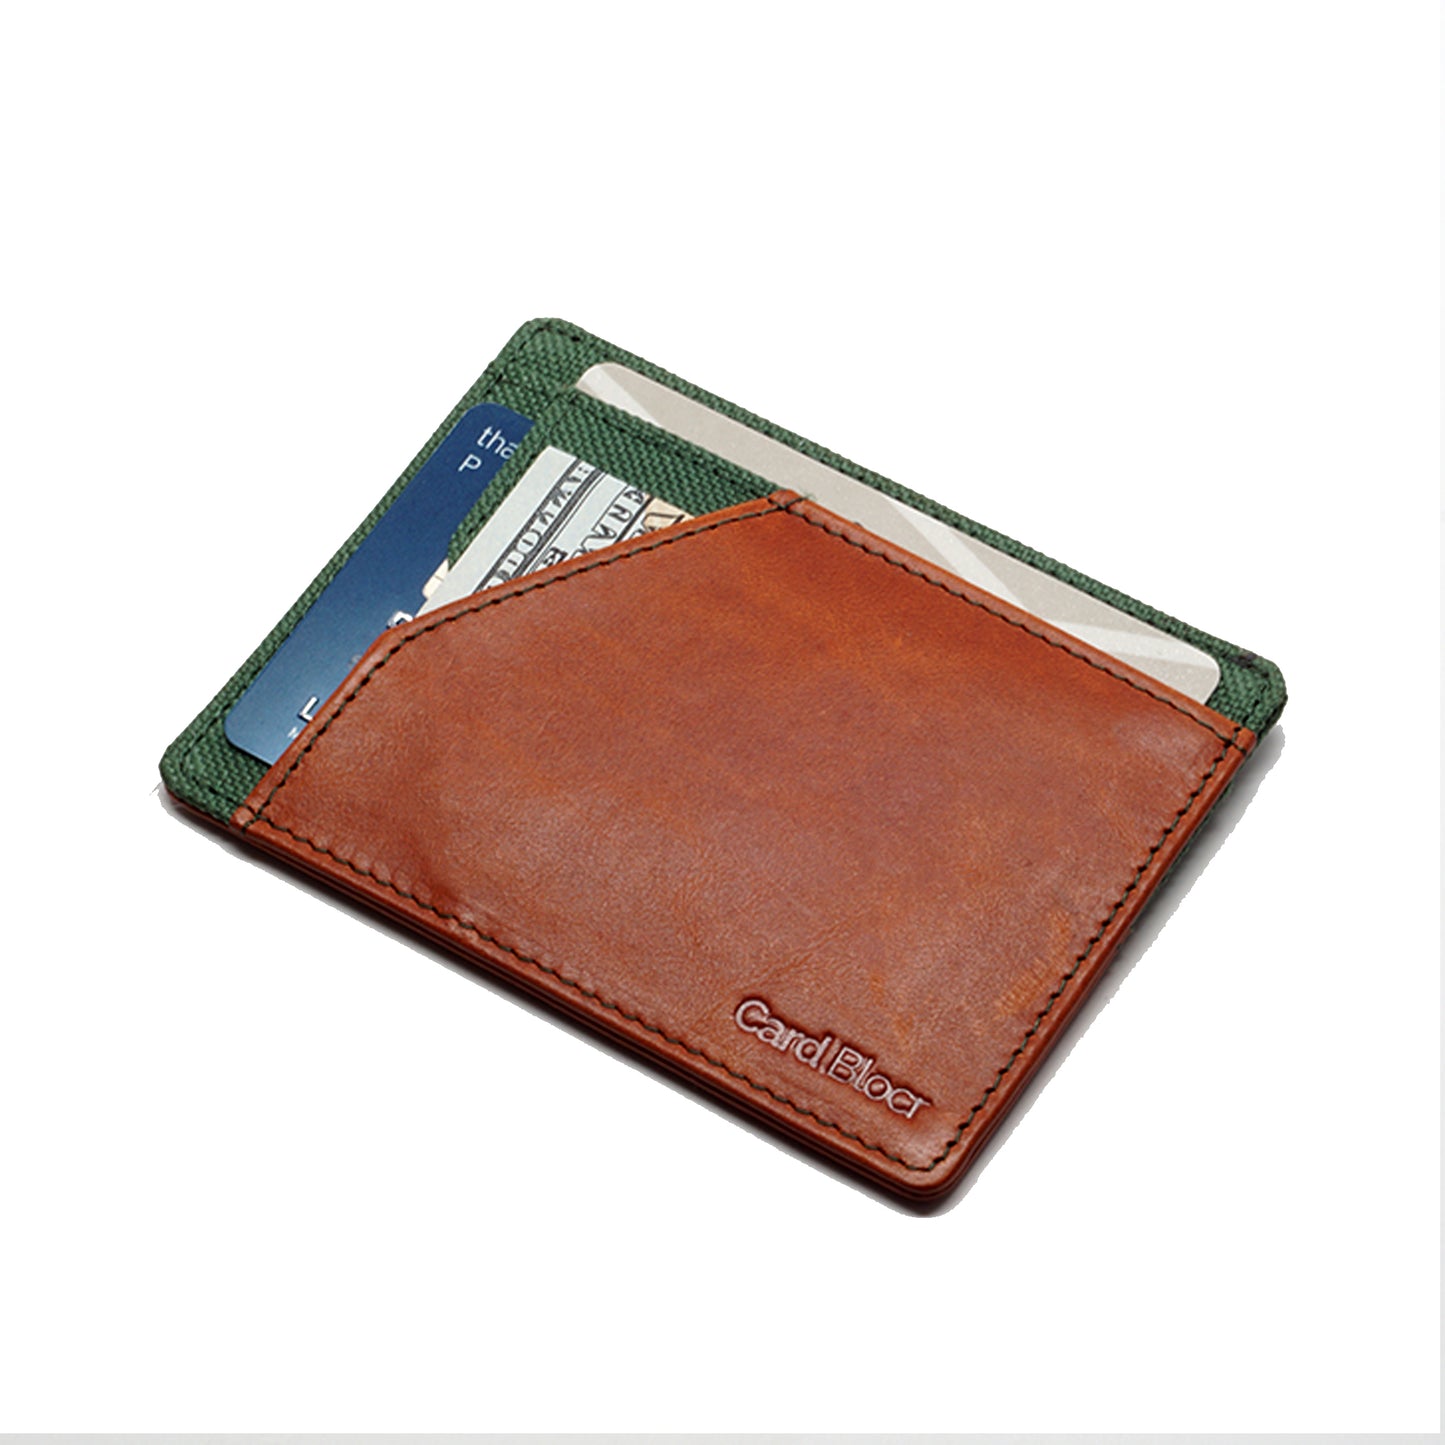 Card Blocr Minimalist Wallet in Distressed Brown Leather & Green Nylon | RFID Blocking Wallet